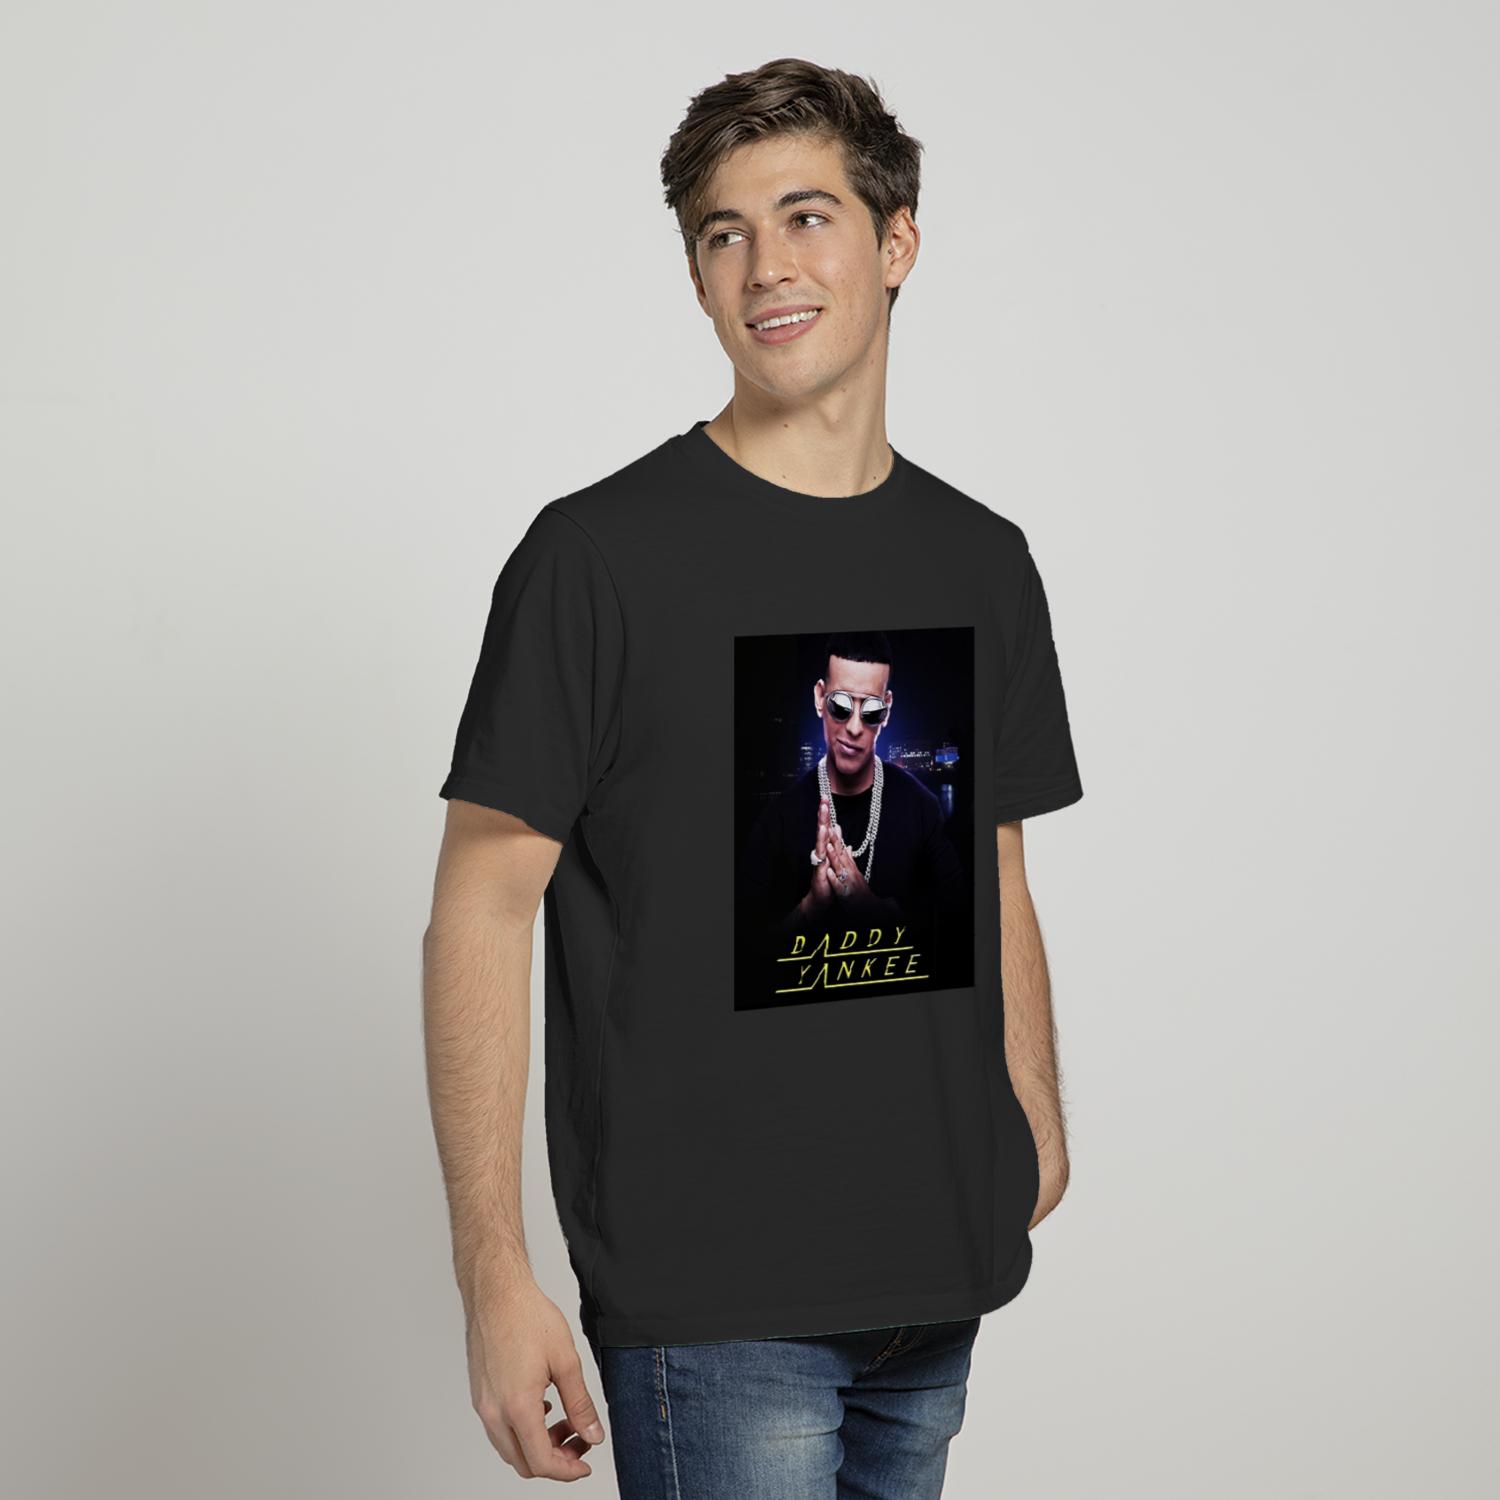 Daddy Yankee Tshirt, 2022 Daddy Yankee Shirt, Daddy Yankee Shirt